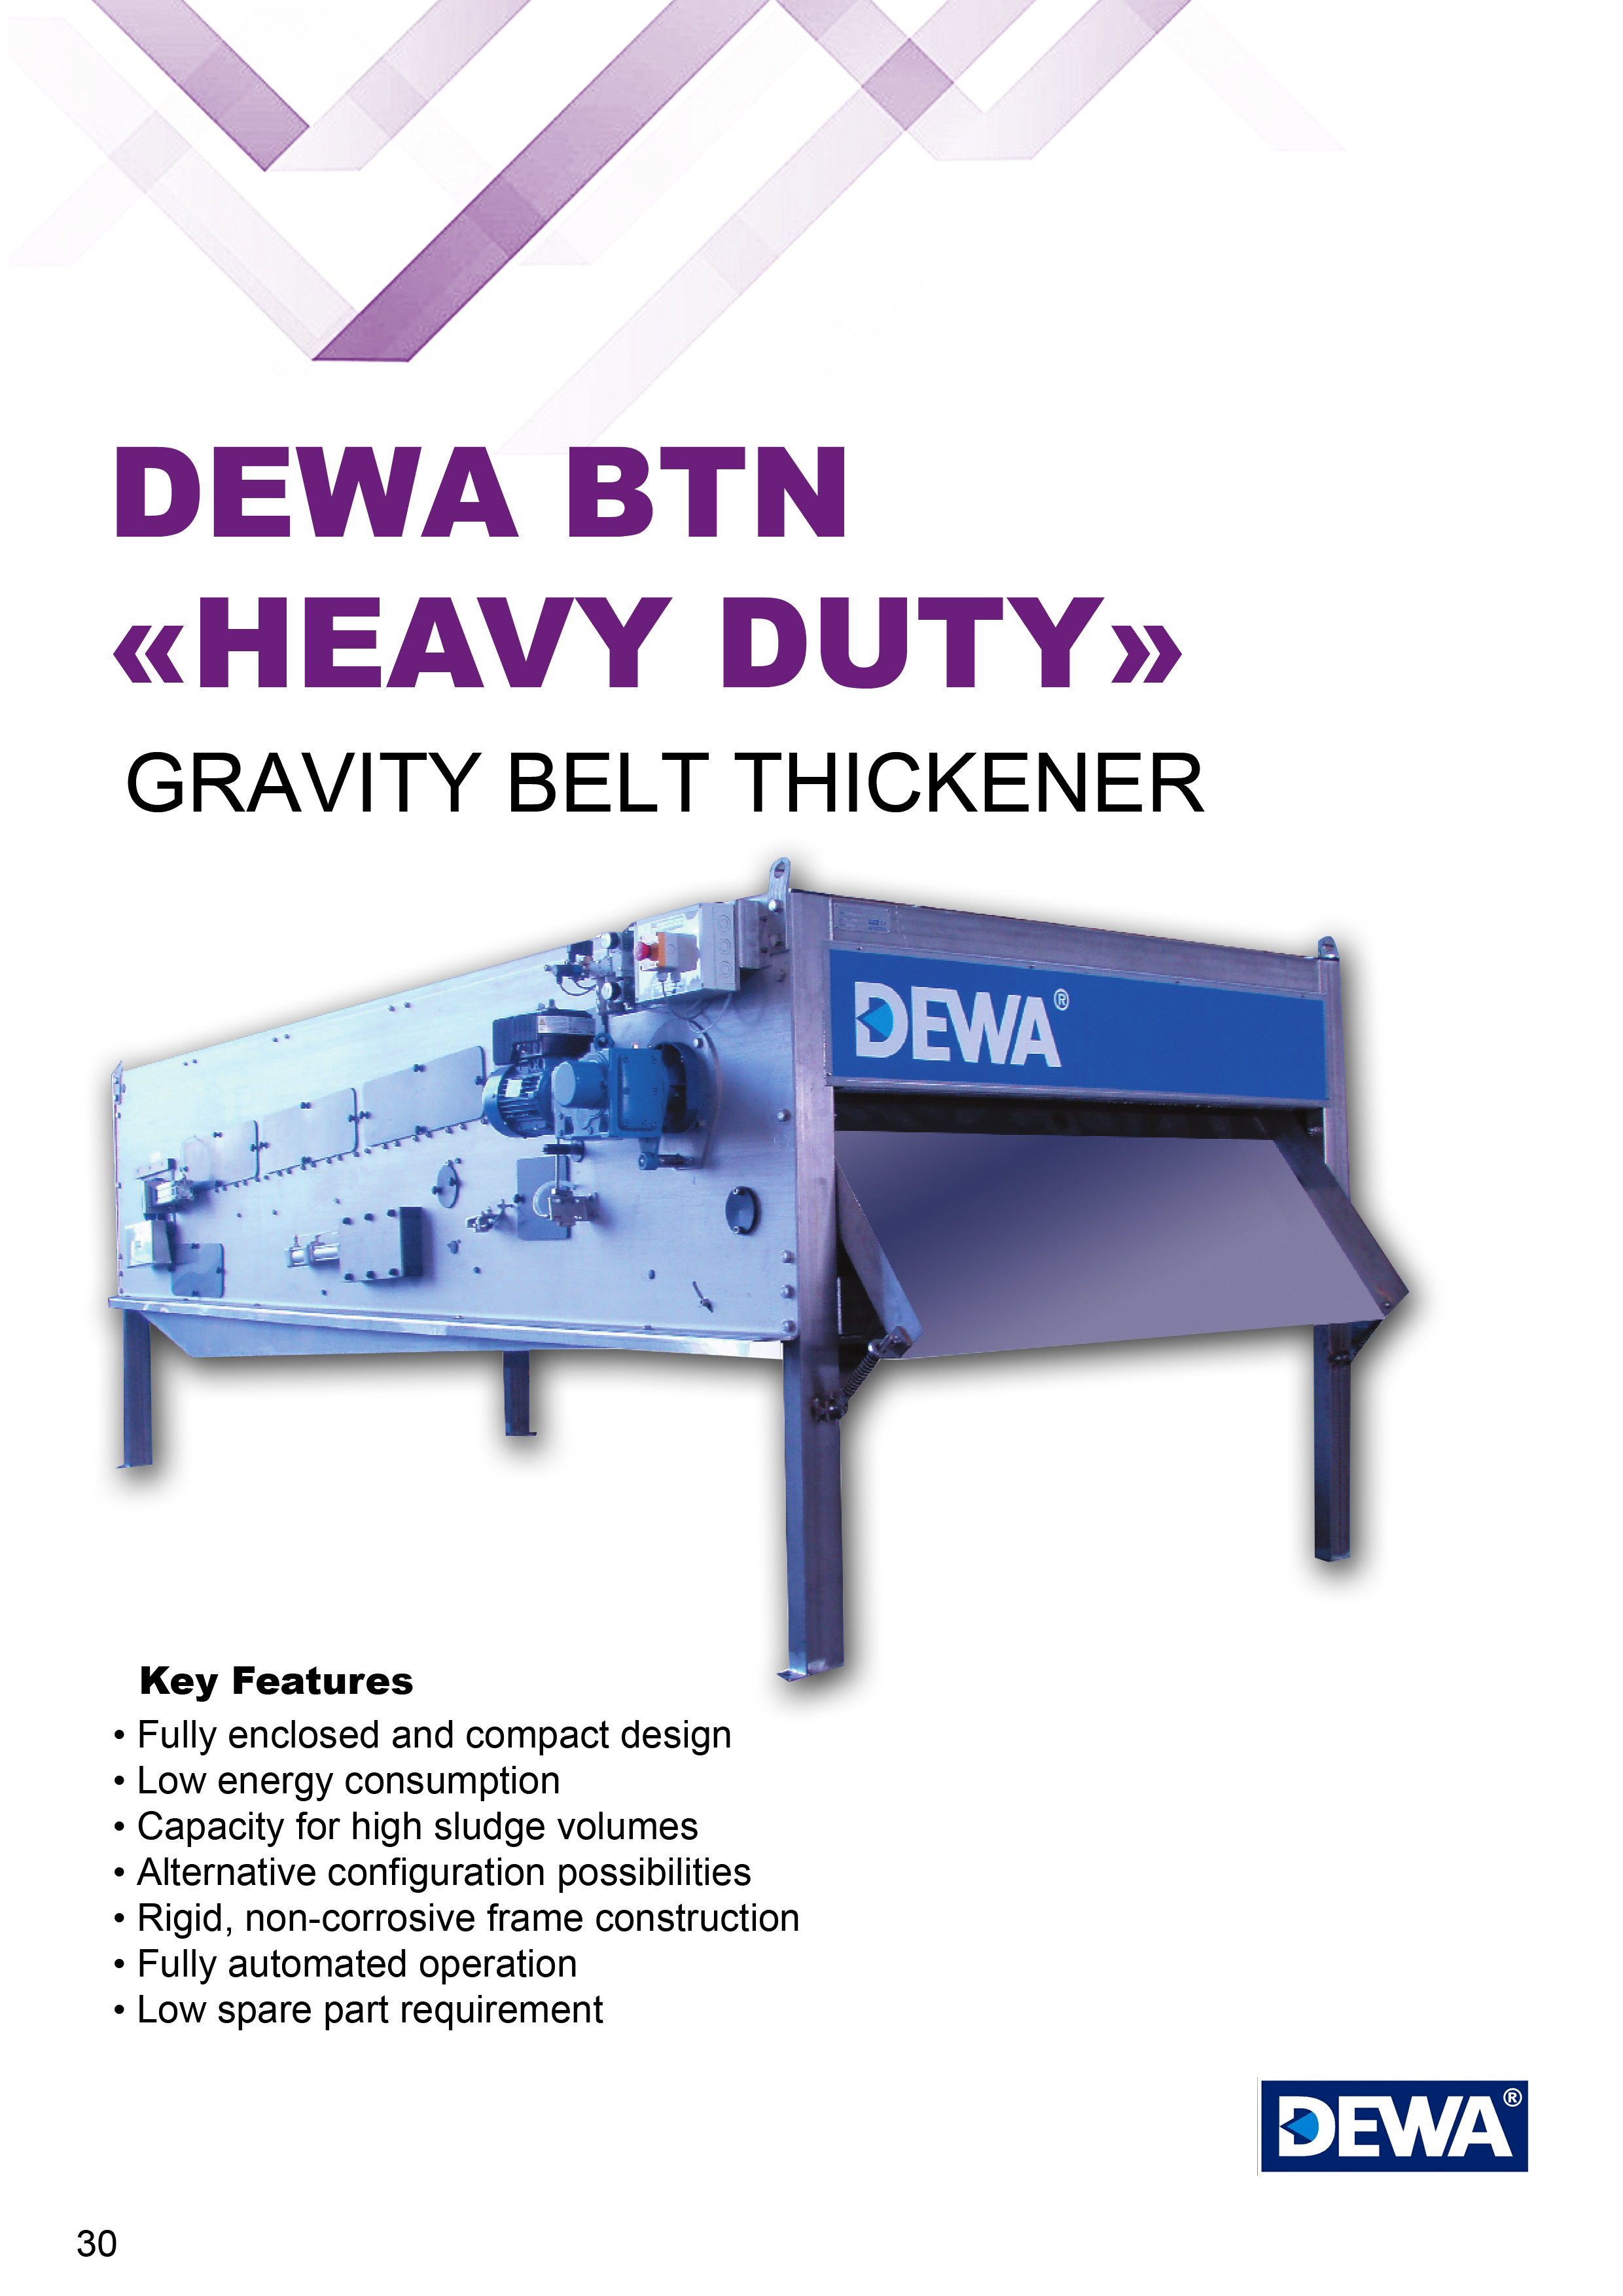 Gravity belt thickener